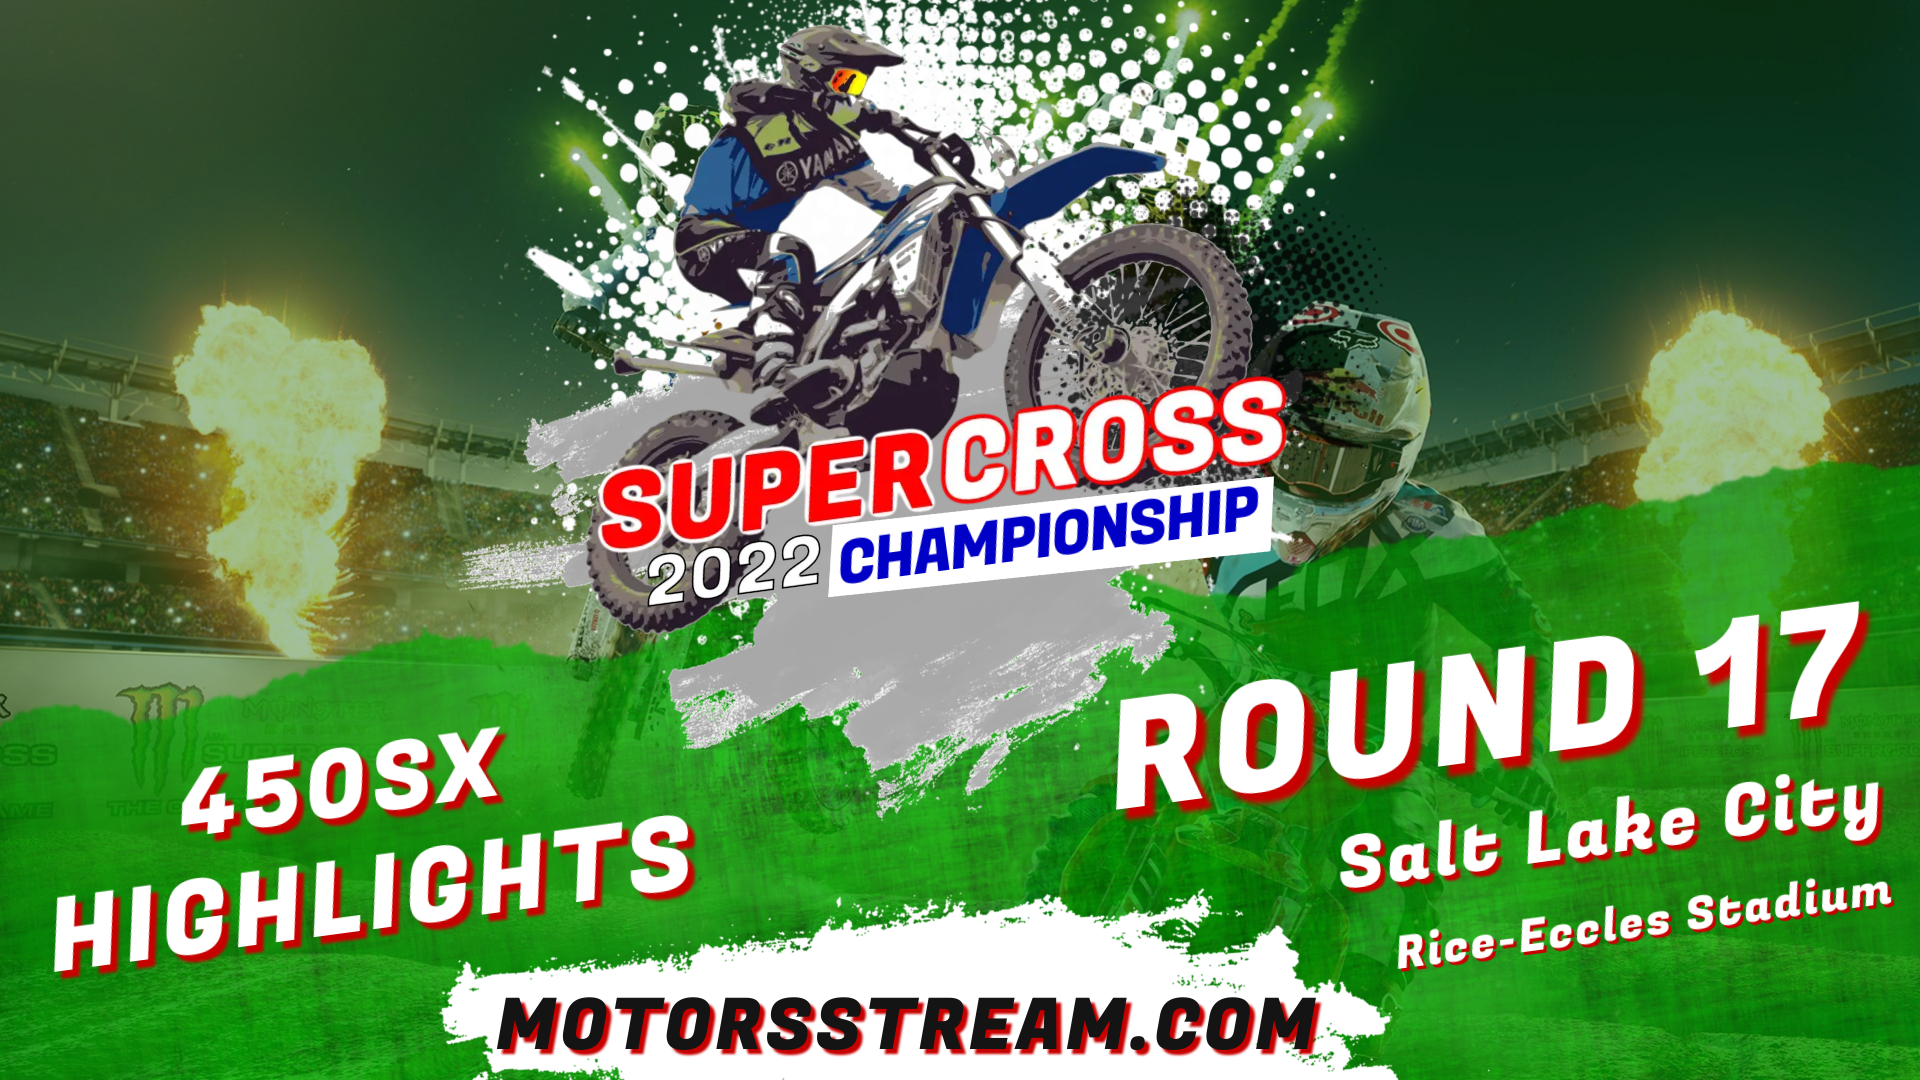 Supercross Round 17 Salt Lake City 450SX Highlights 2022